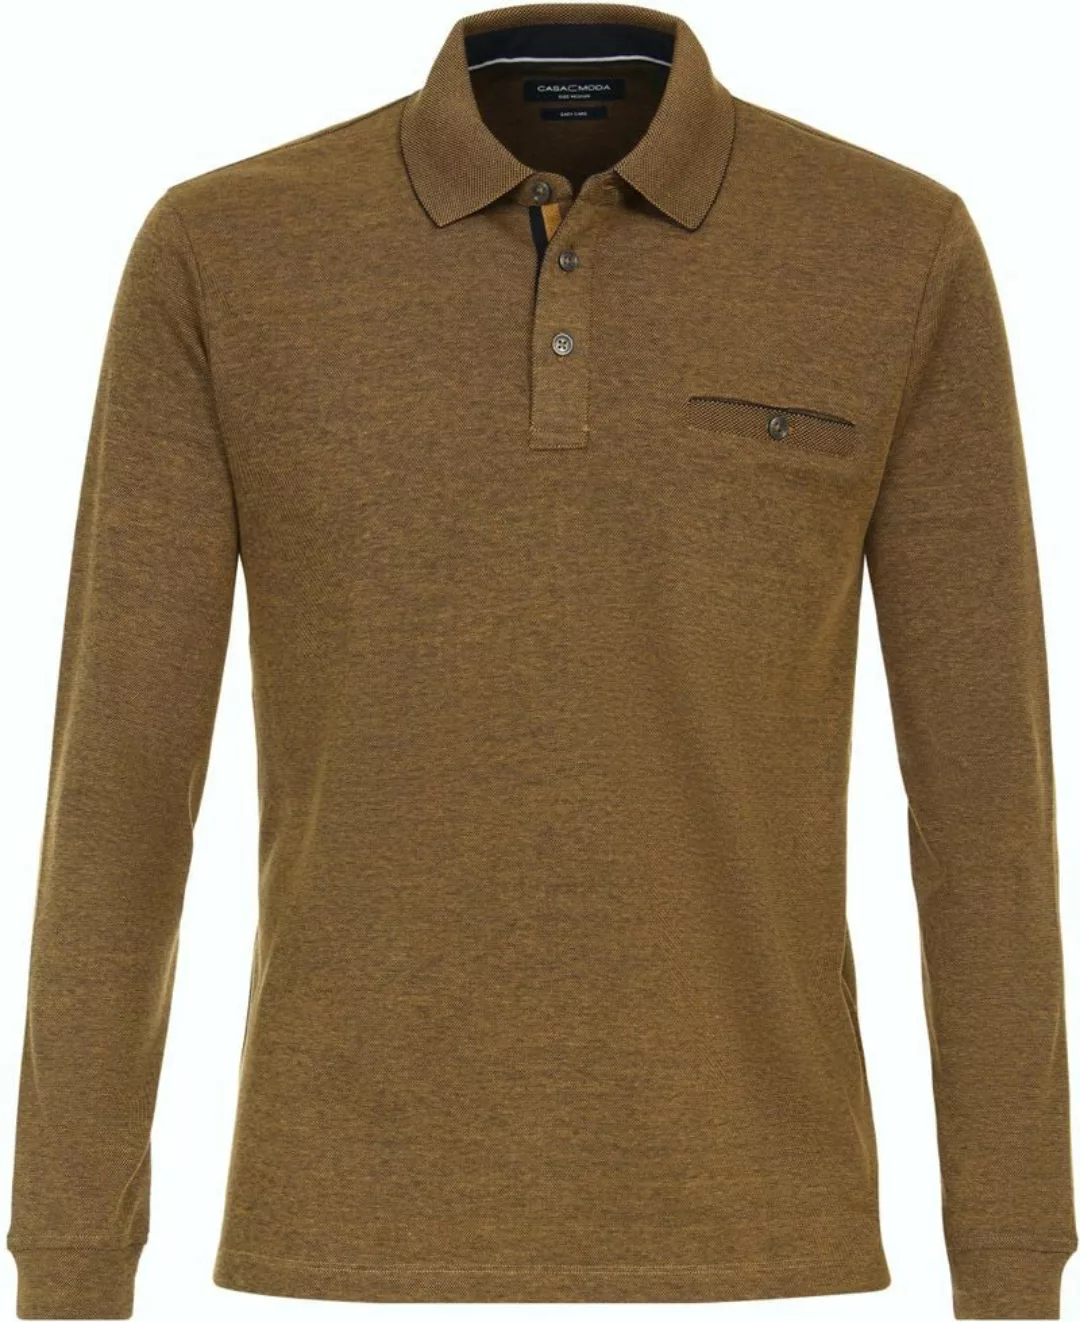 Casa Moda Poloshirt Long Sleeves Gelb - Größe XL günstig online kaufen